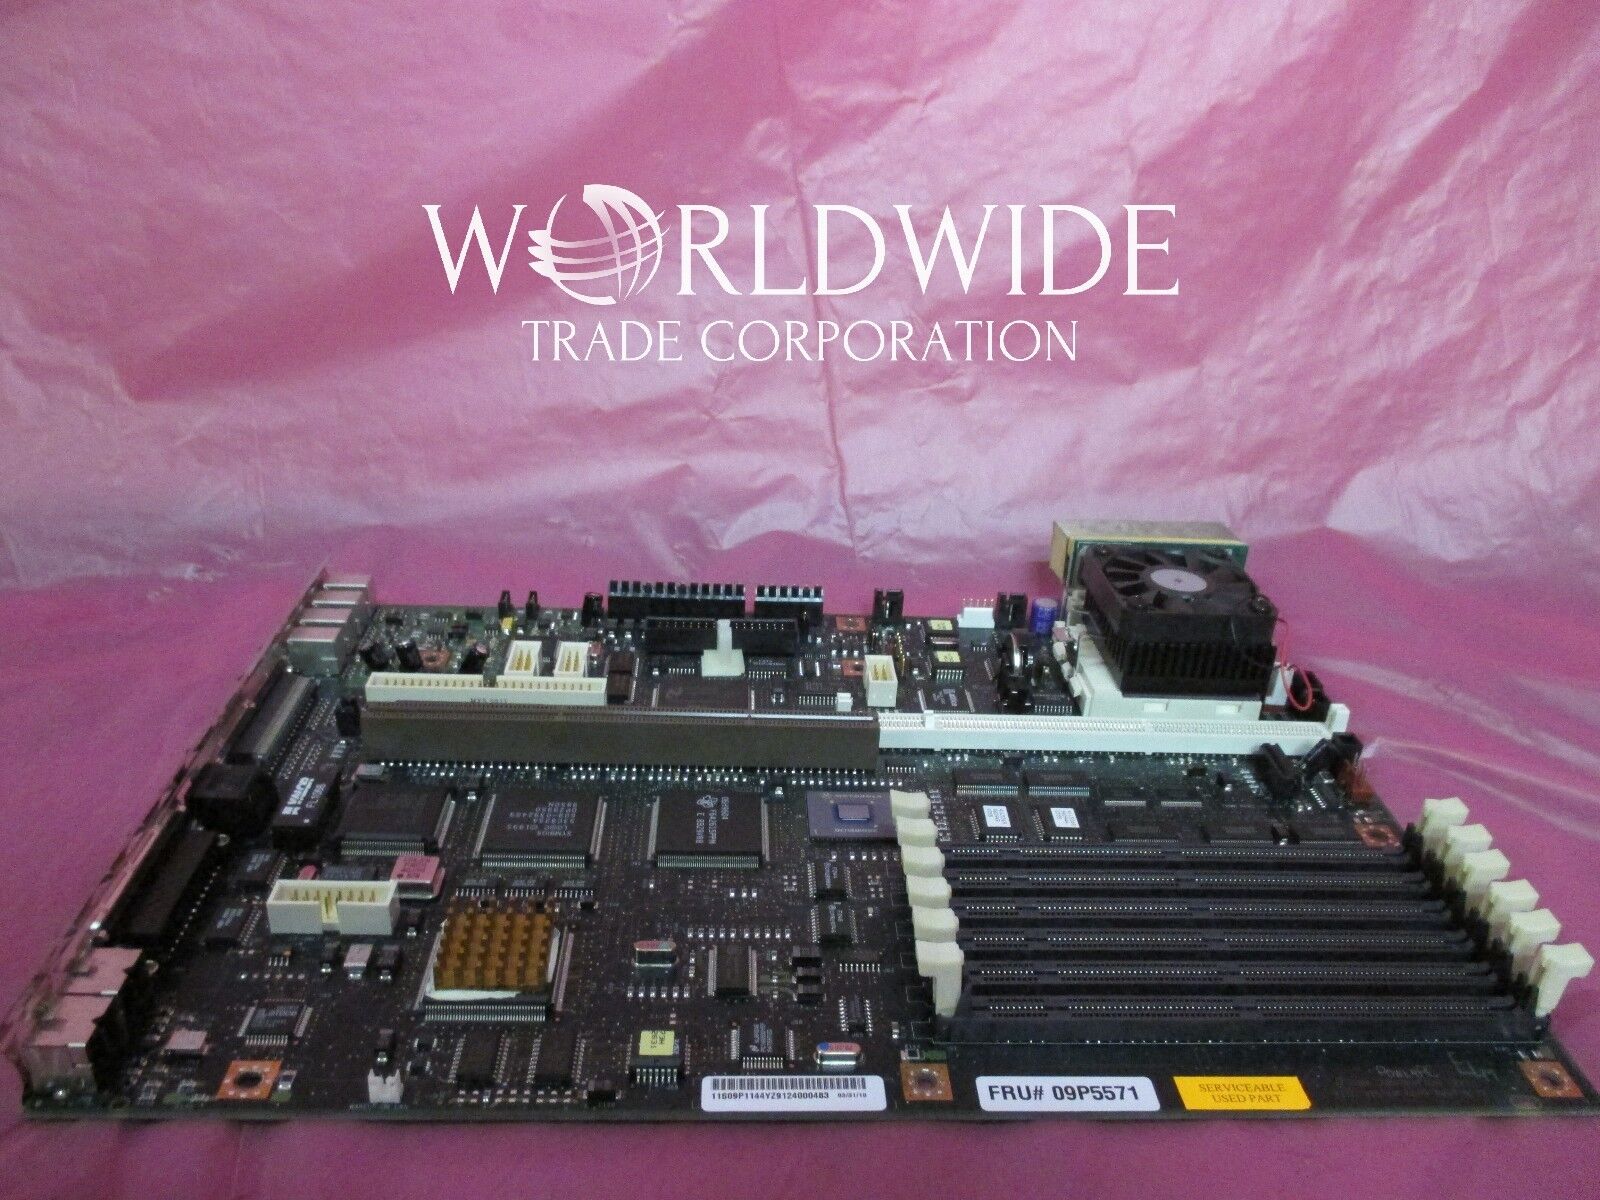 IBM 09P5571 4310 200MHz 1-way PowerPC 604e Processor System Board for 7043-140